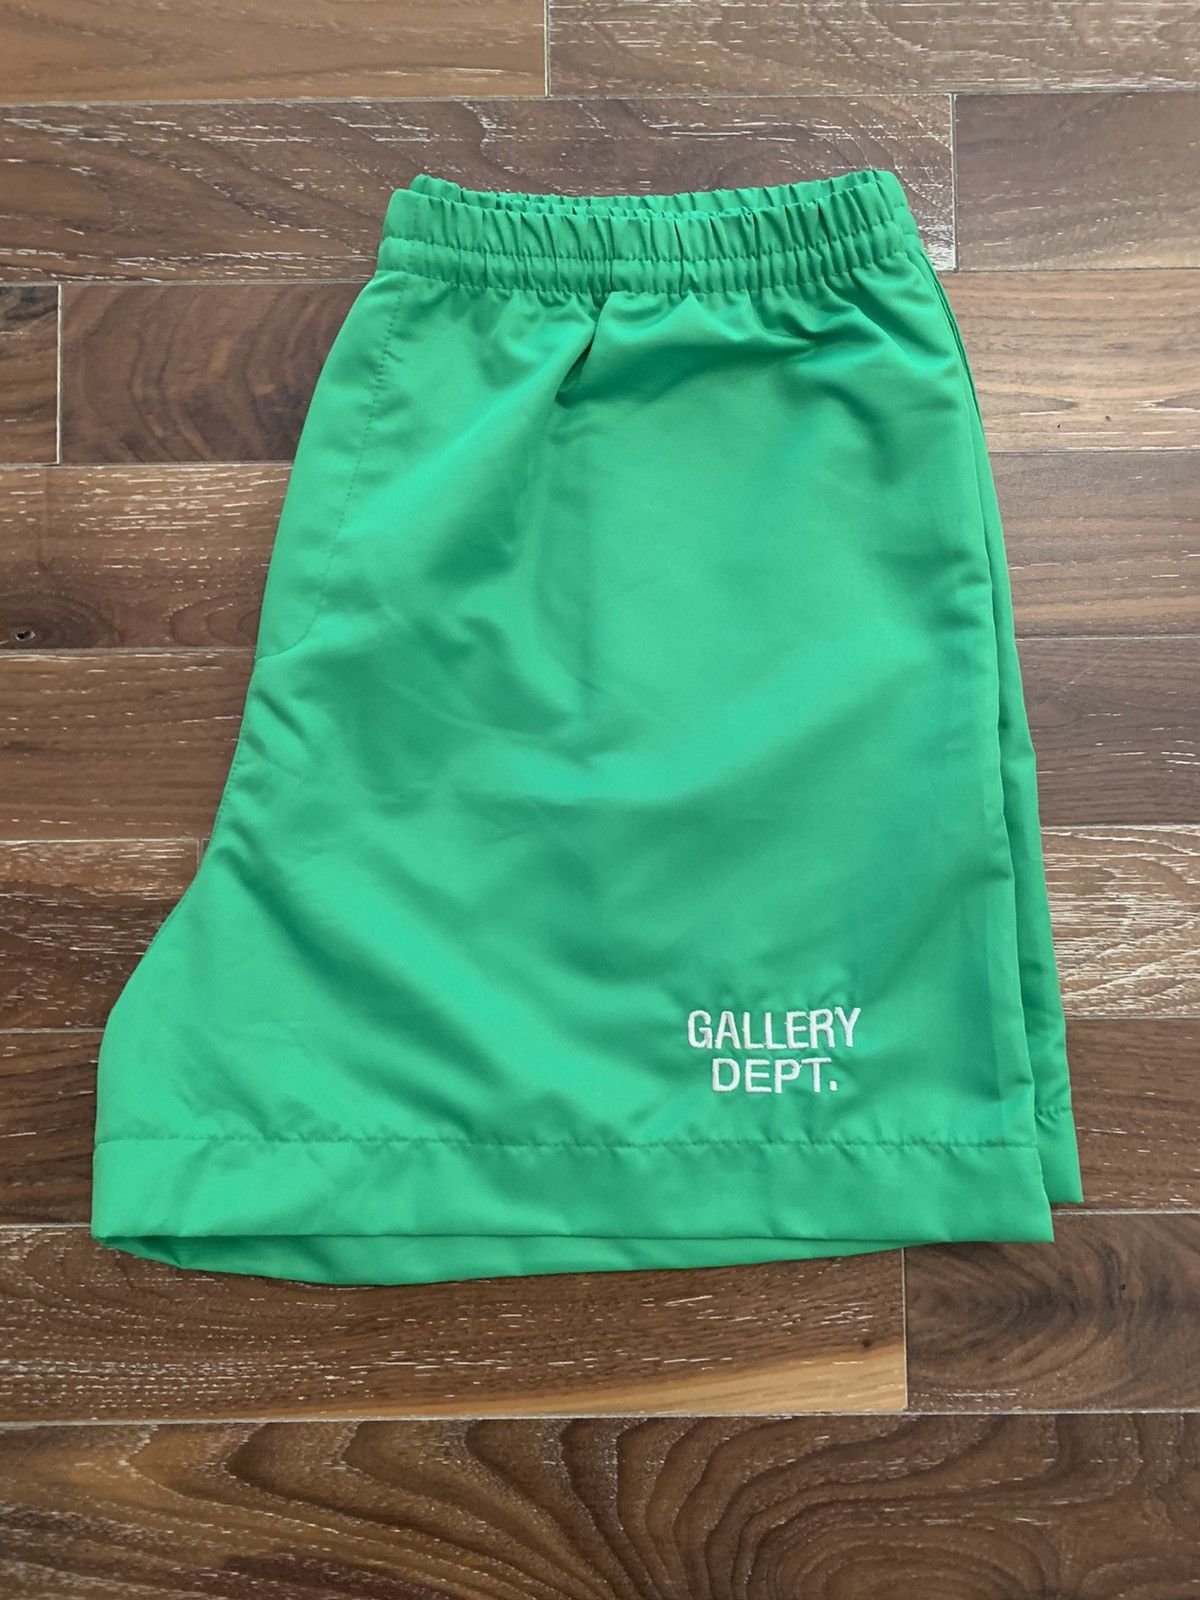 Gallery Dept. Gallery Dept Zuma Green shorts XL | Grailed